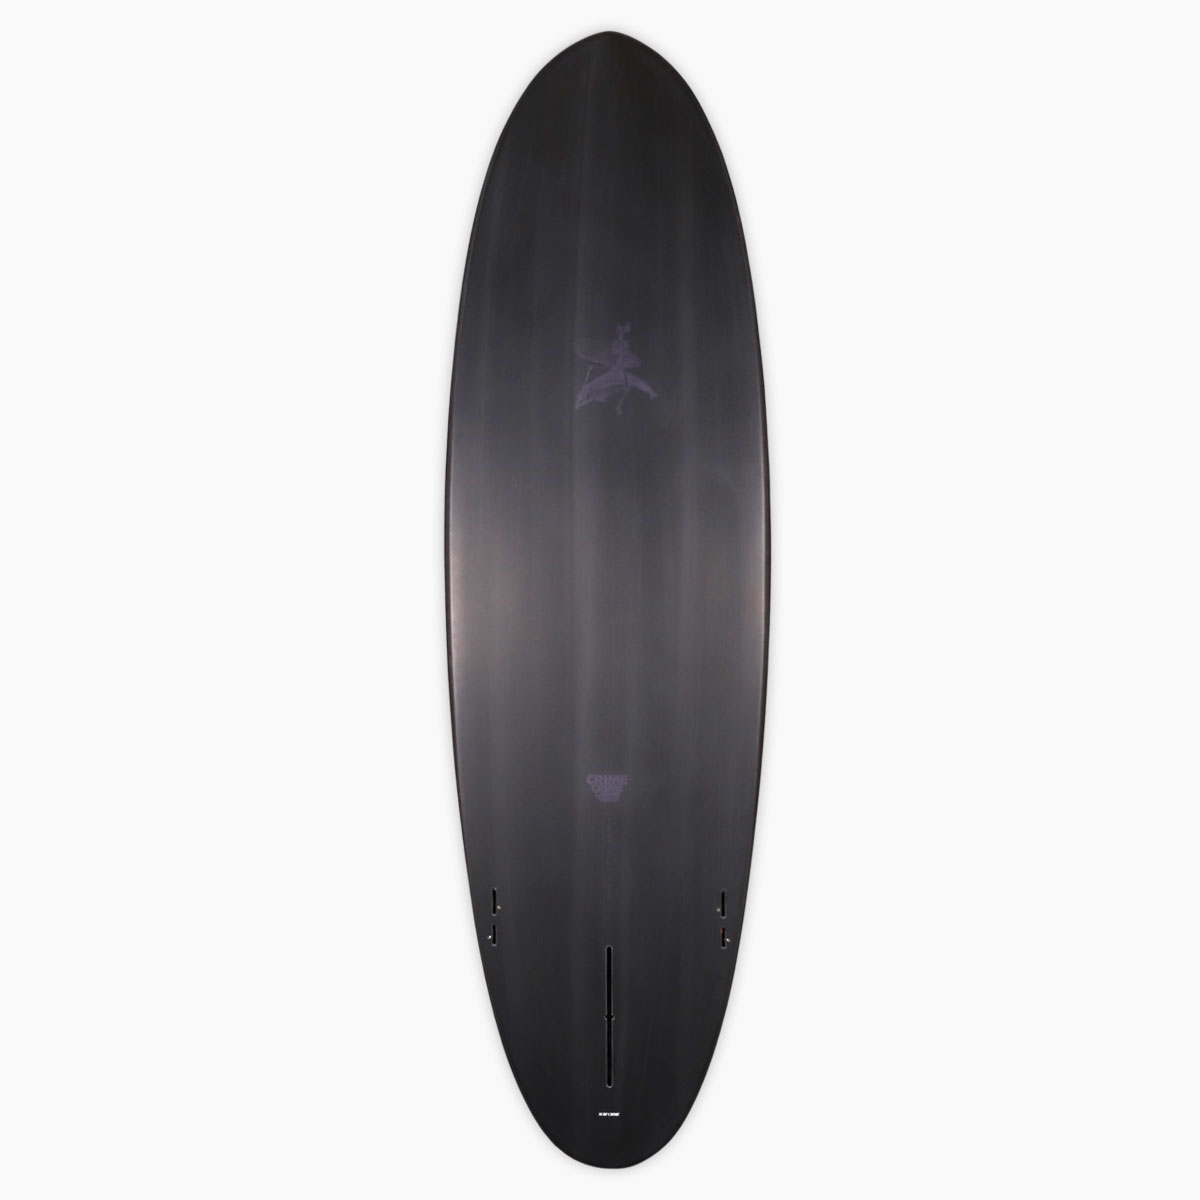 SurfBoardNet / ブランド:CRIME SURFBOARDS モデル:GOTHIC DOLPHINS ...